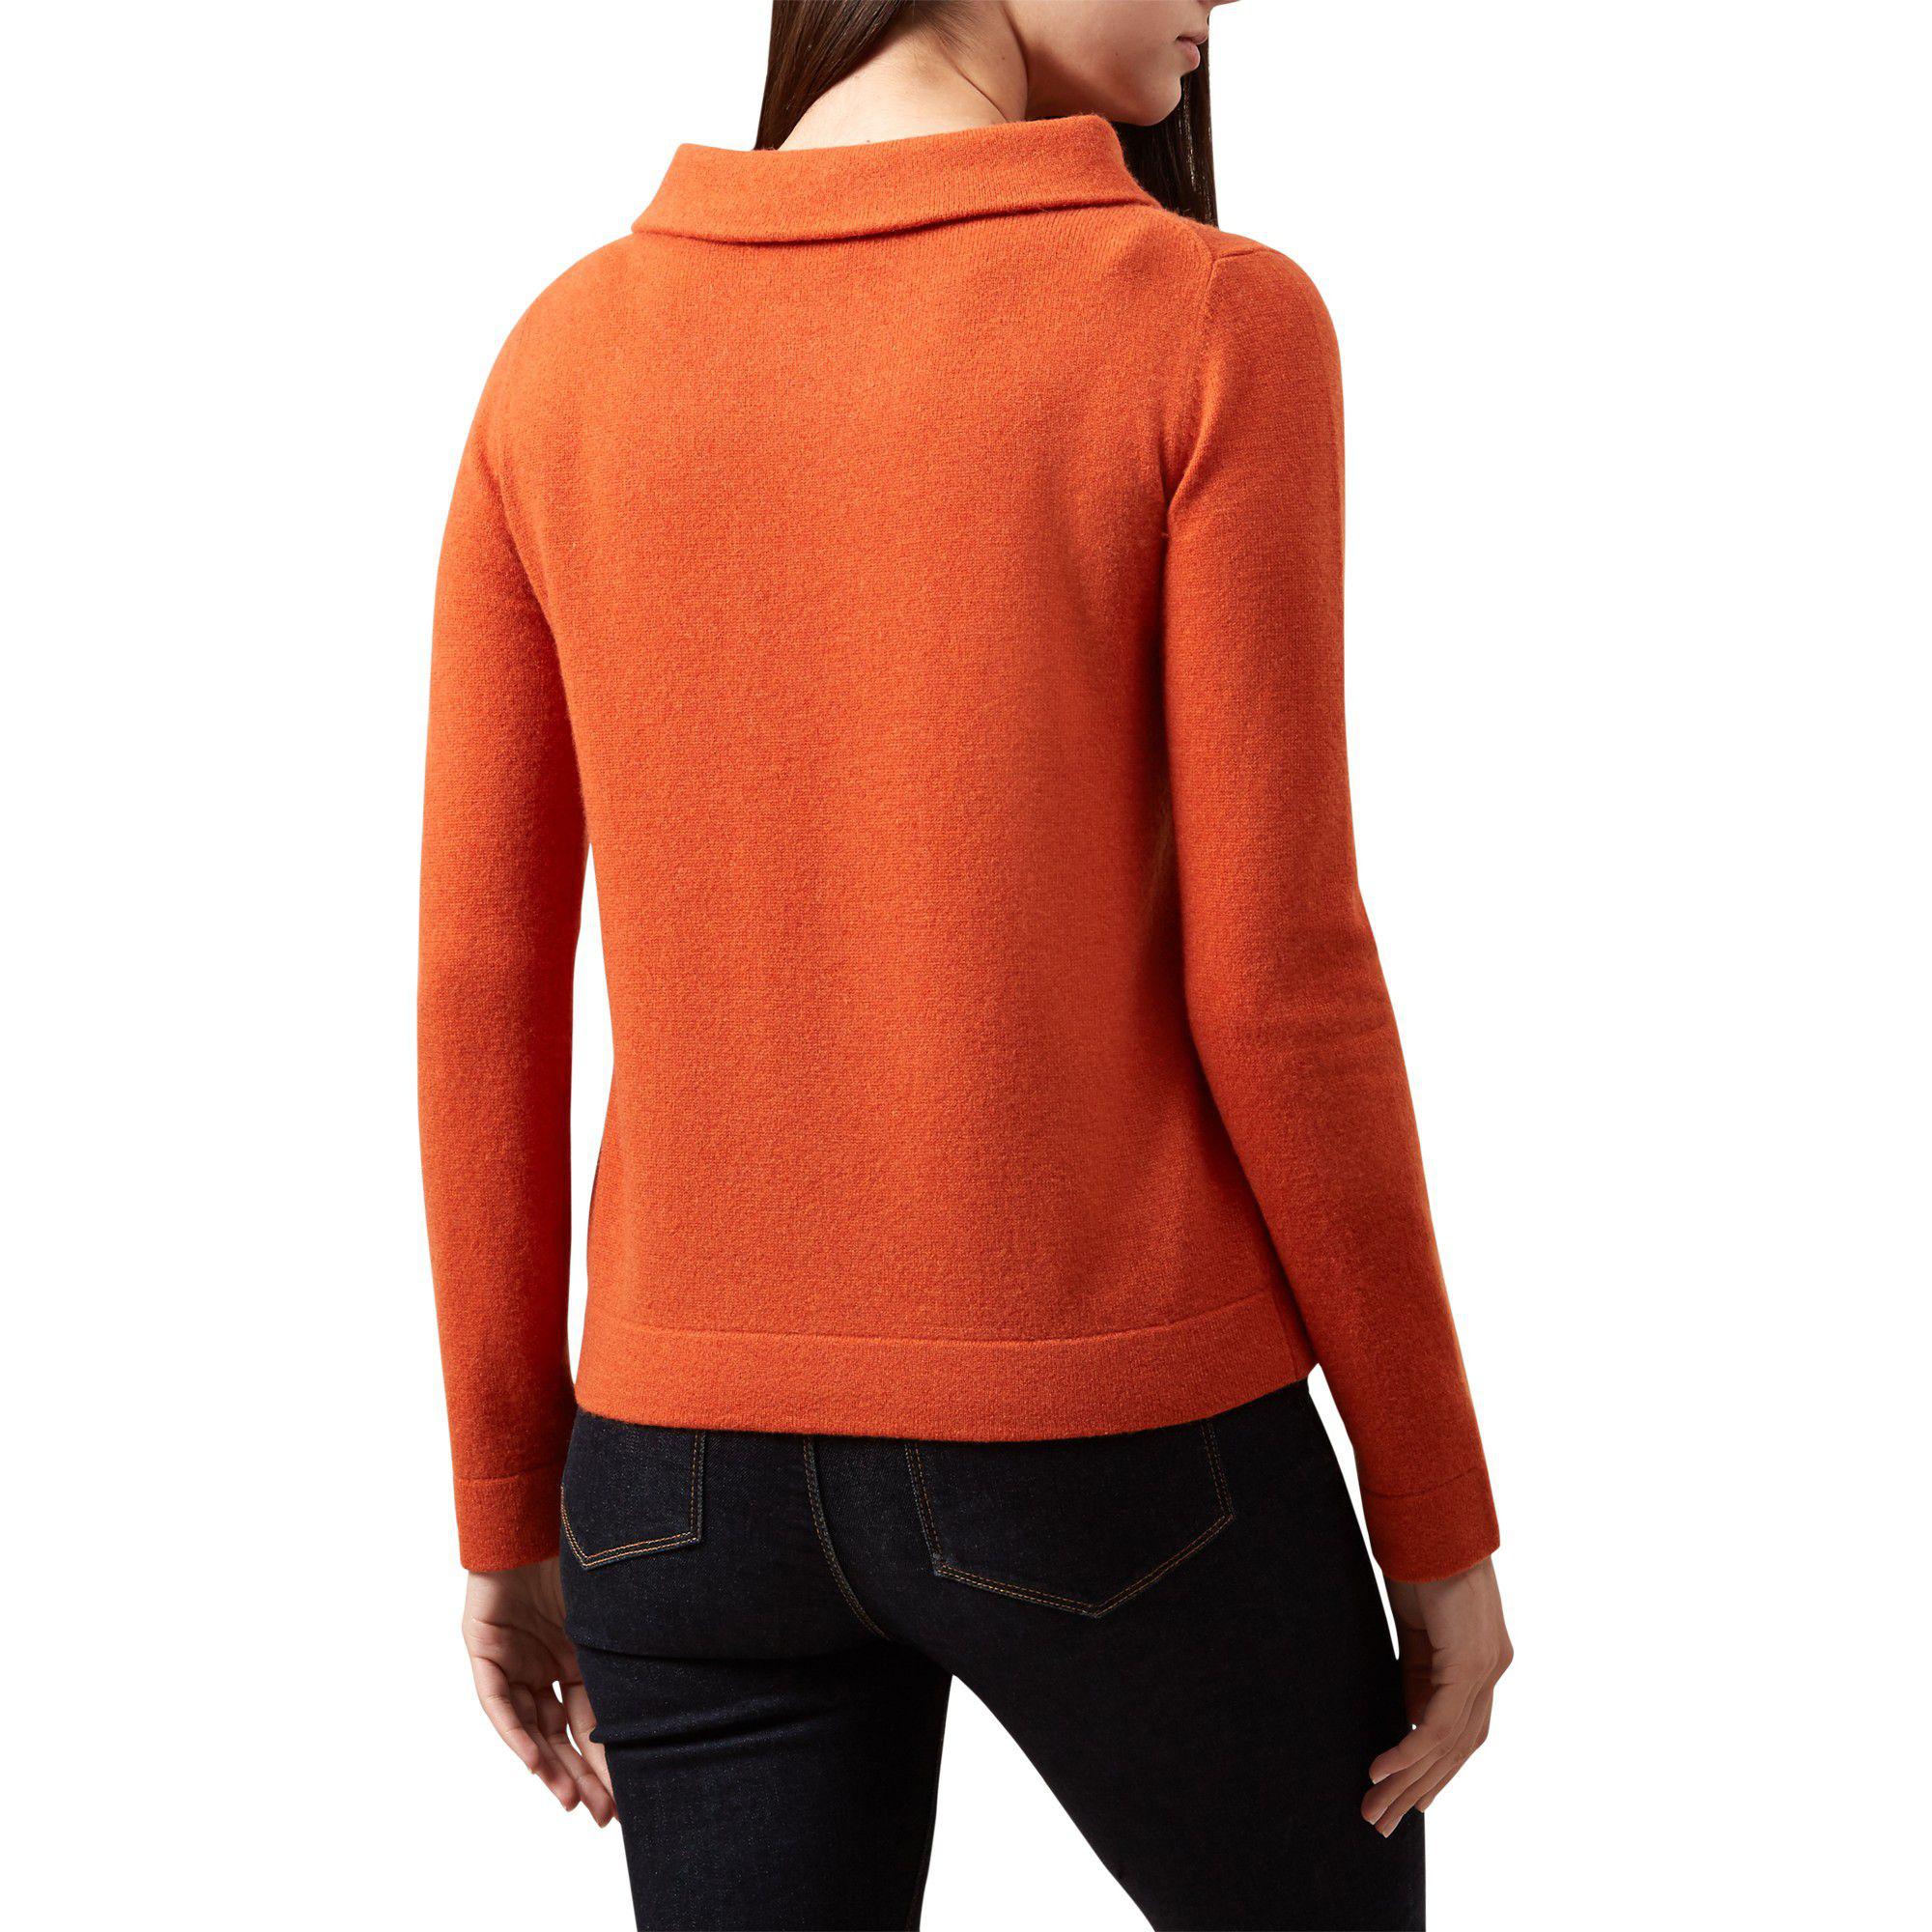 Hobbs Wool Audrey Sweater in Tangerine (Orange) - Lyst